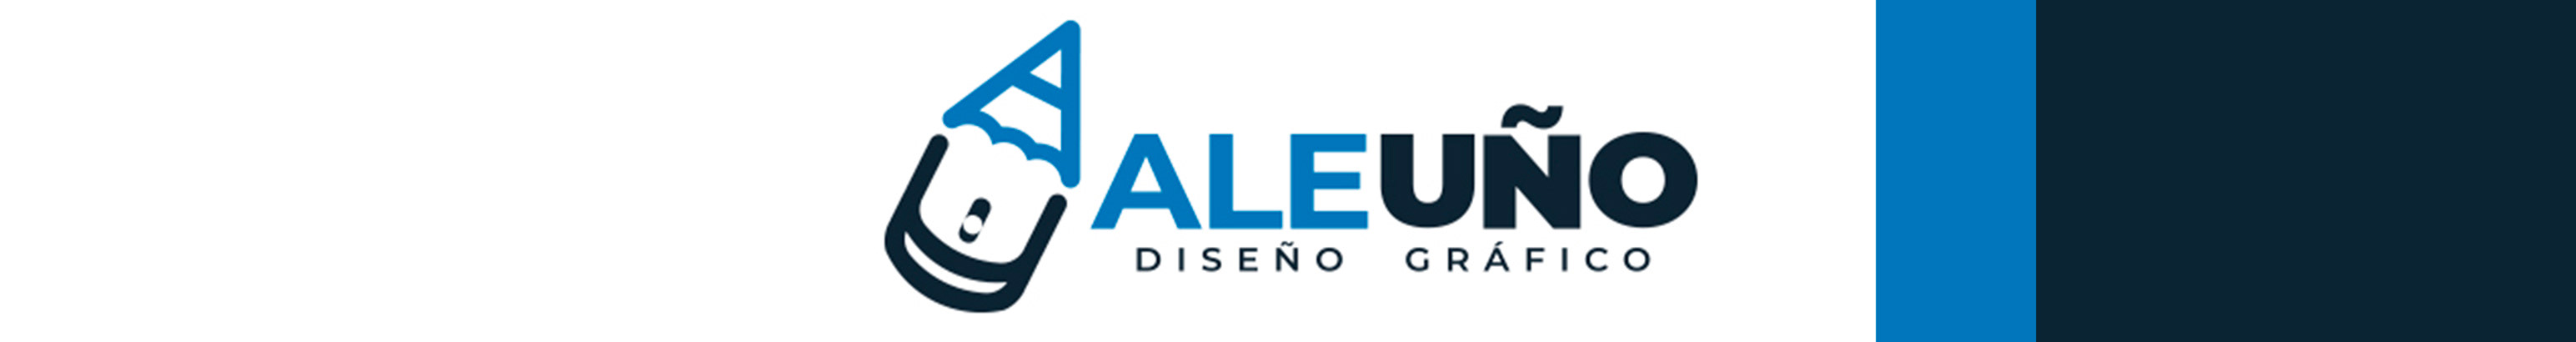 Profil-Banner von Manuel Alejandro Uño Filipps